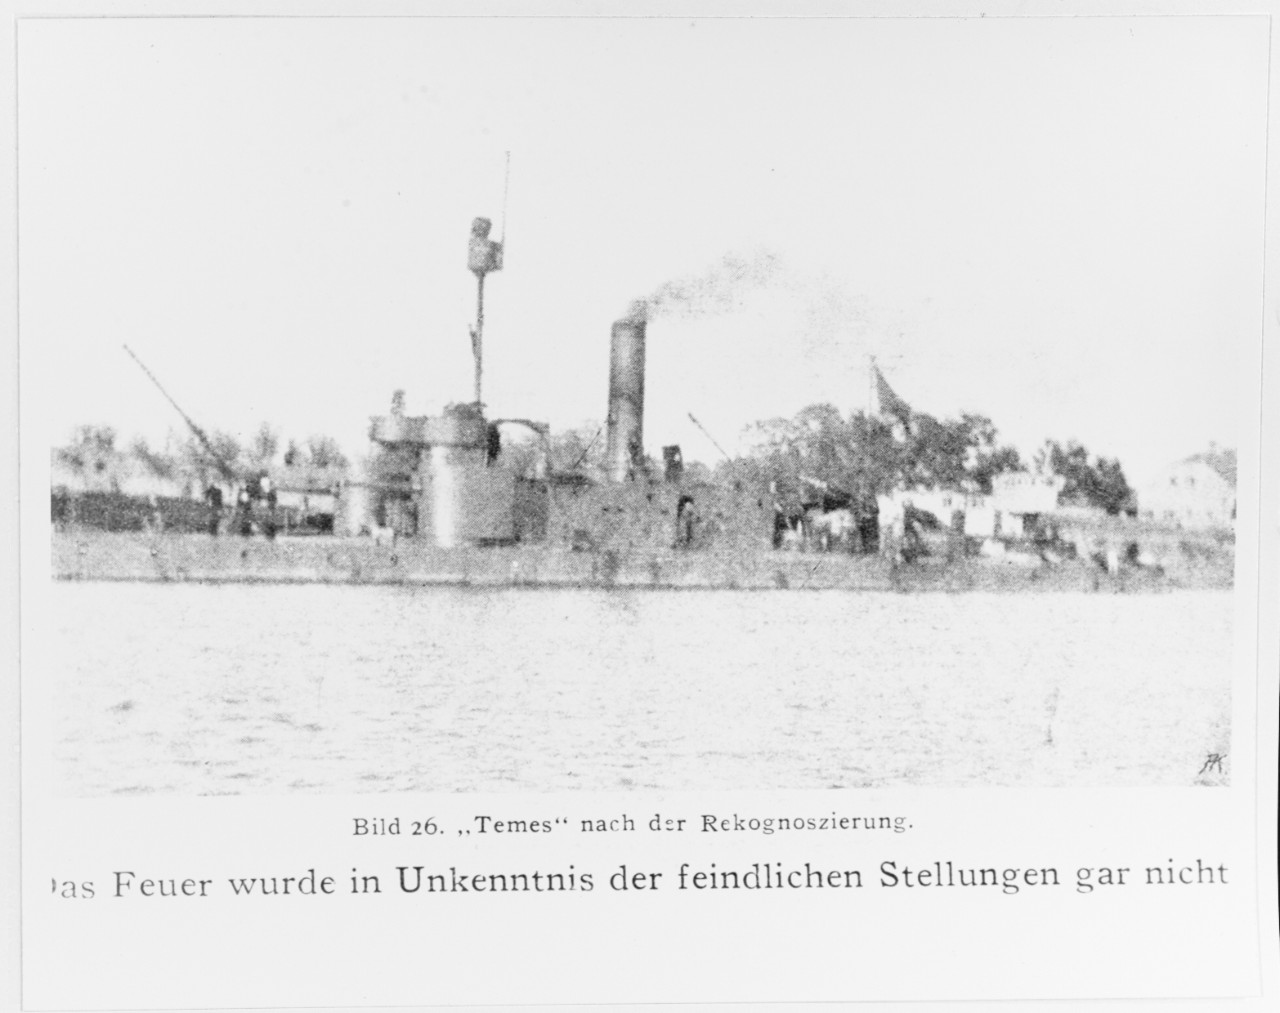 TEMES Austrian River Monitor, 1904